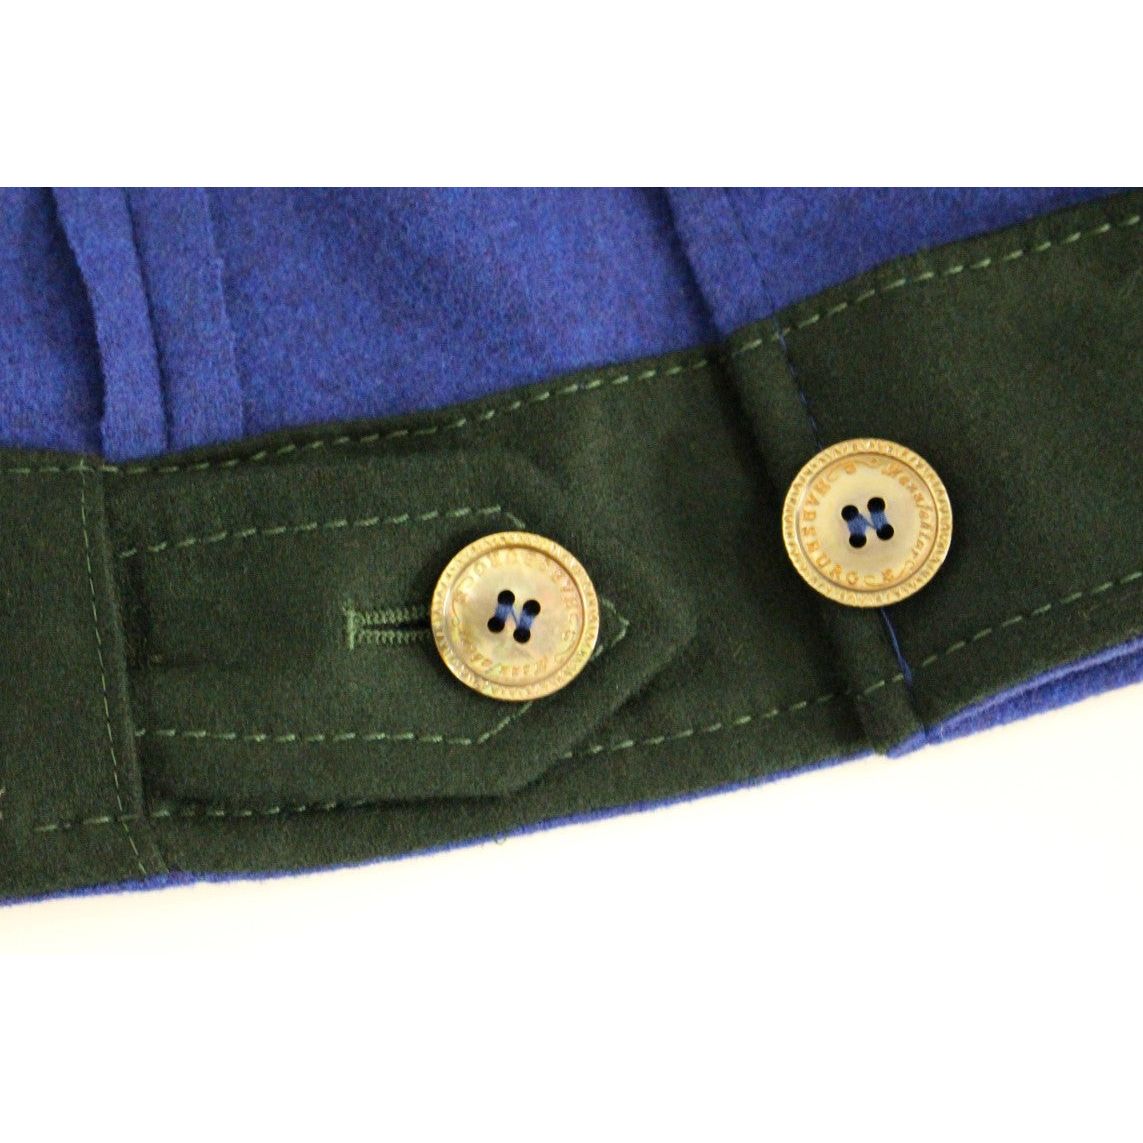 Andrea Incontri Elegant Blue Wool Jacket with Removable Collar habsburg-blue-green-wool-jacket-coat Coats & Jackets 148686-habsburg-blue-green-wool-jacket-coat-7.jpg